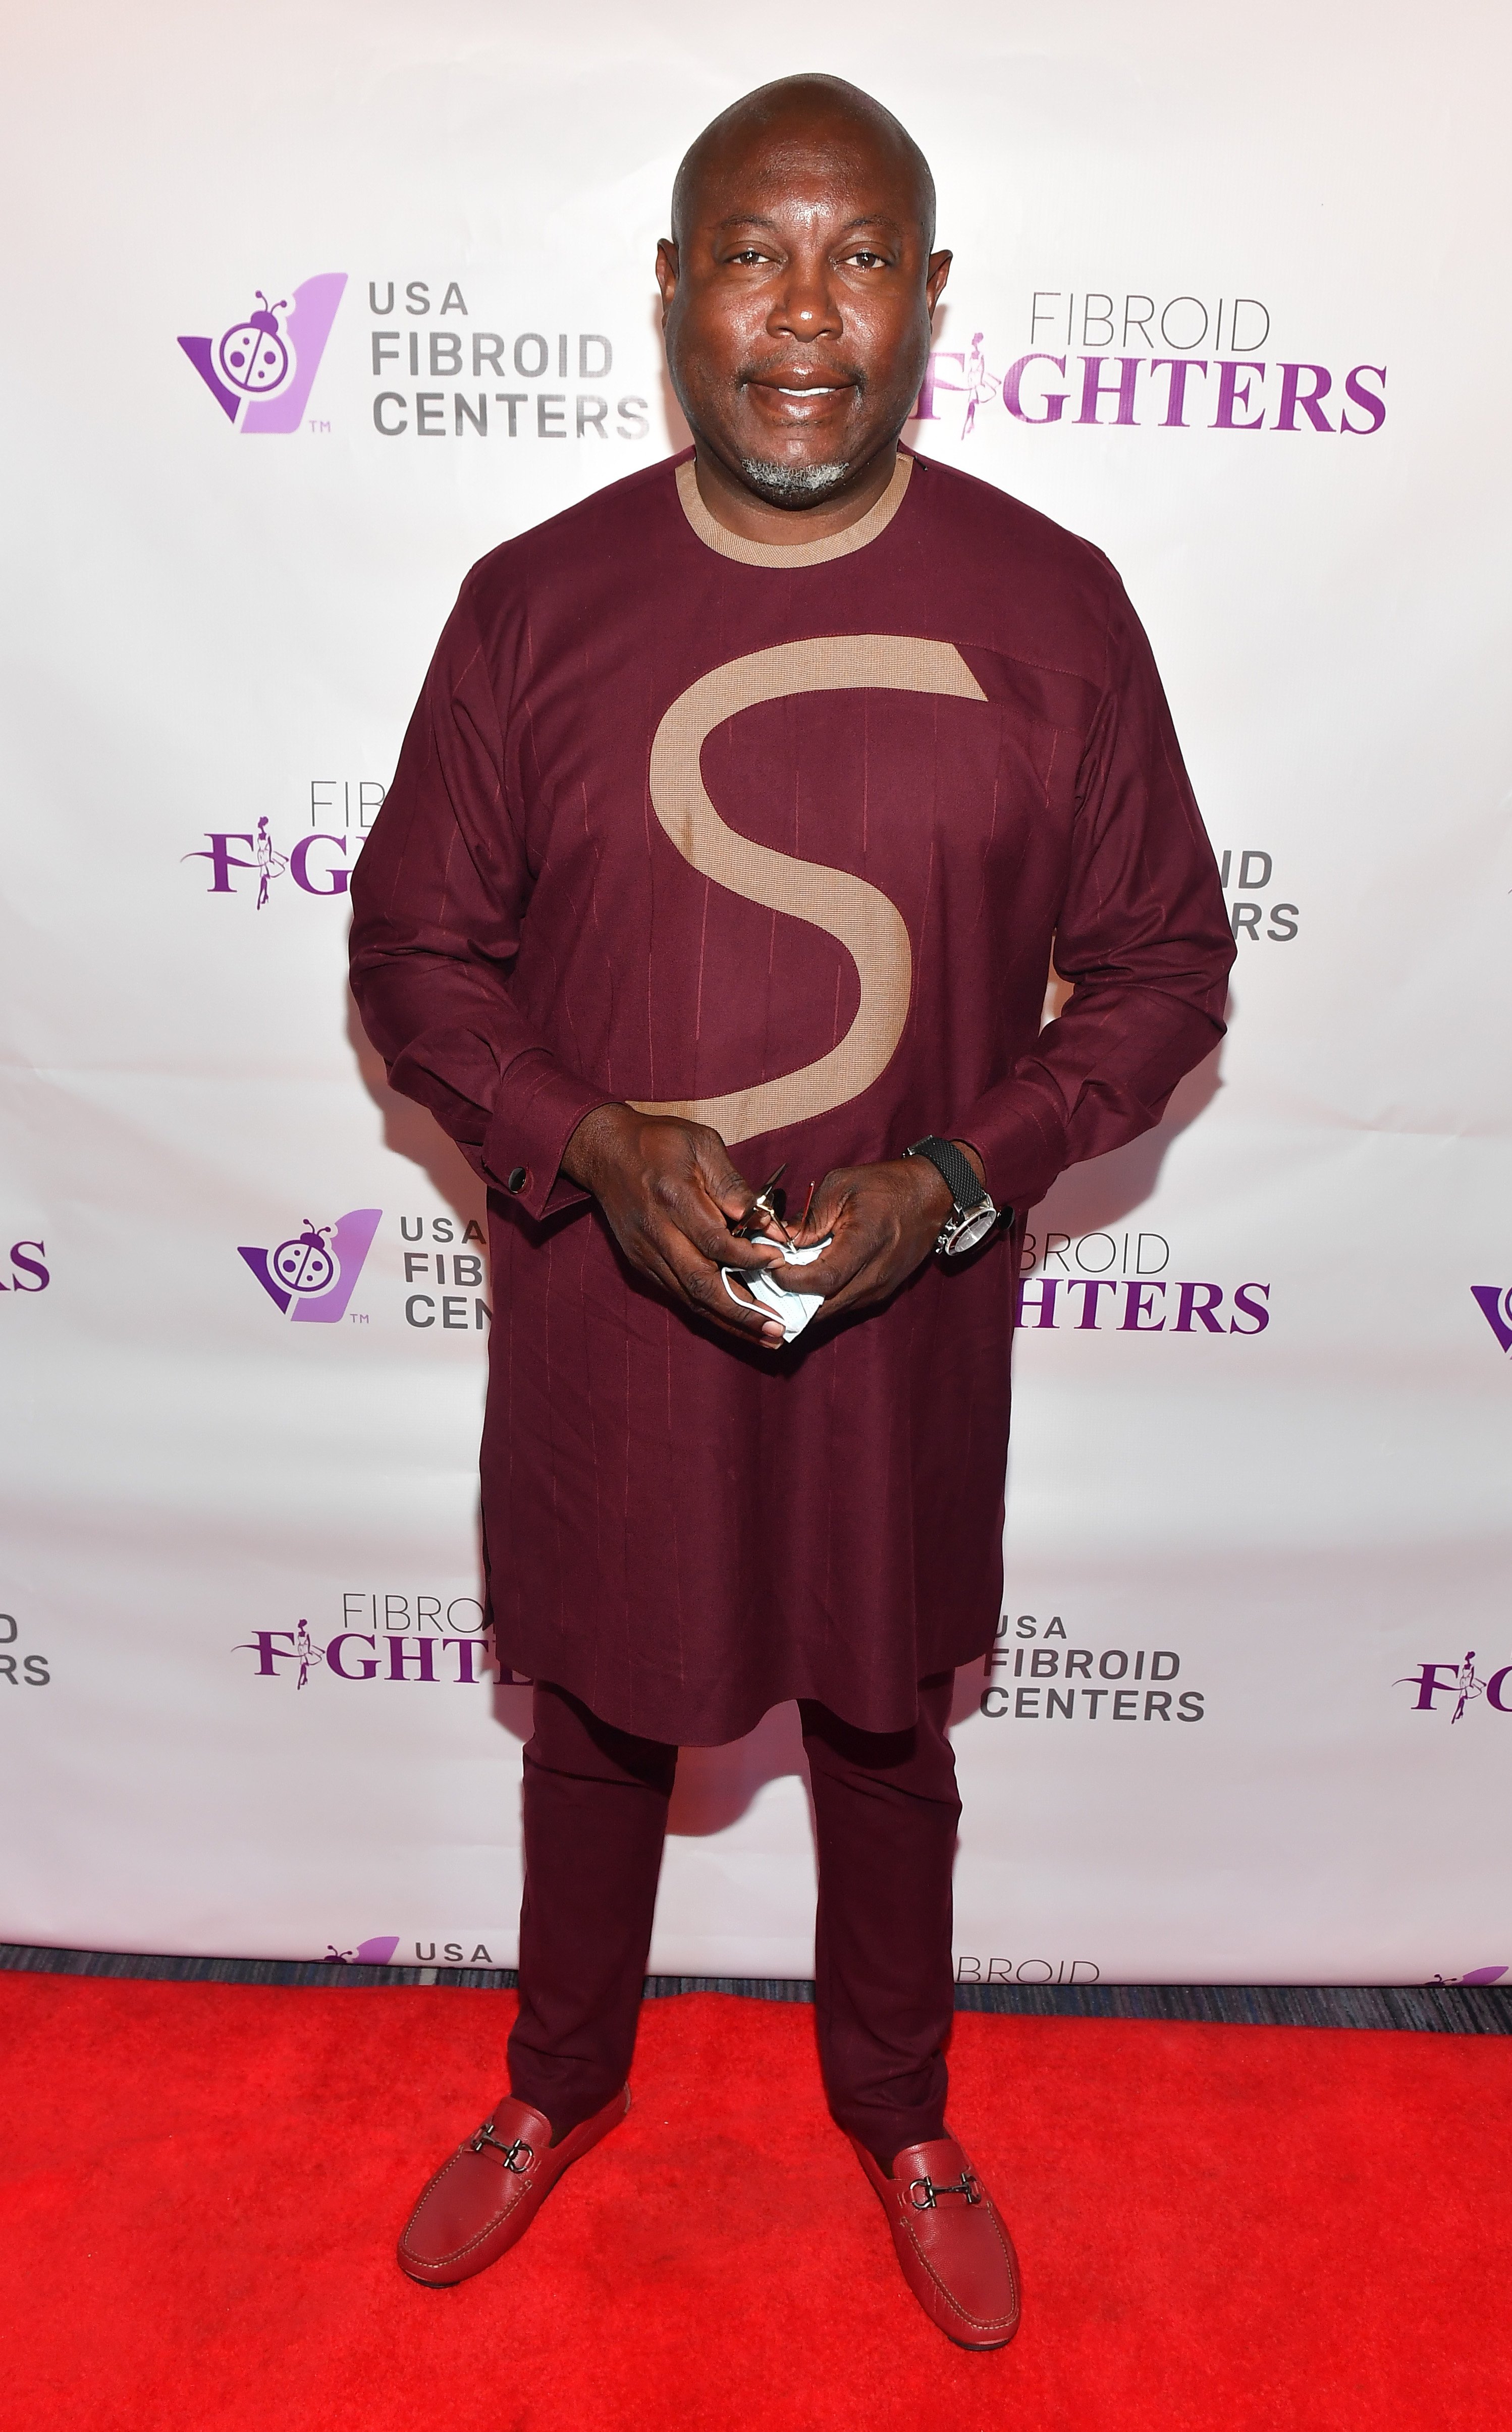 Simon Guobadia at an event for The Fight For Fibroids in Atlanta